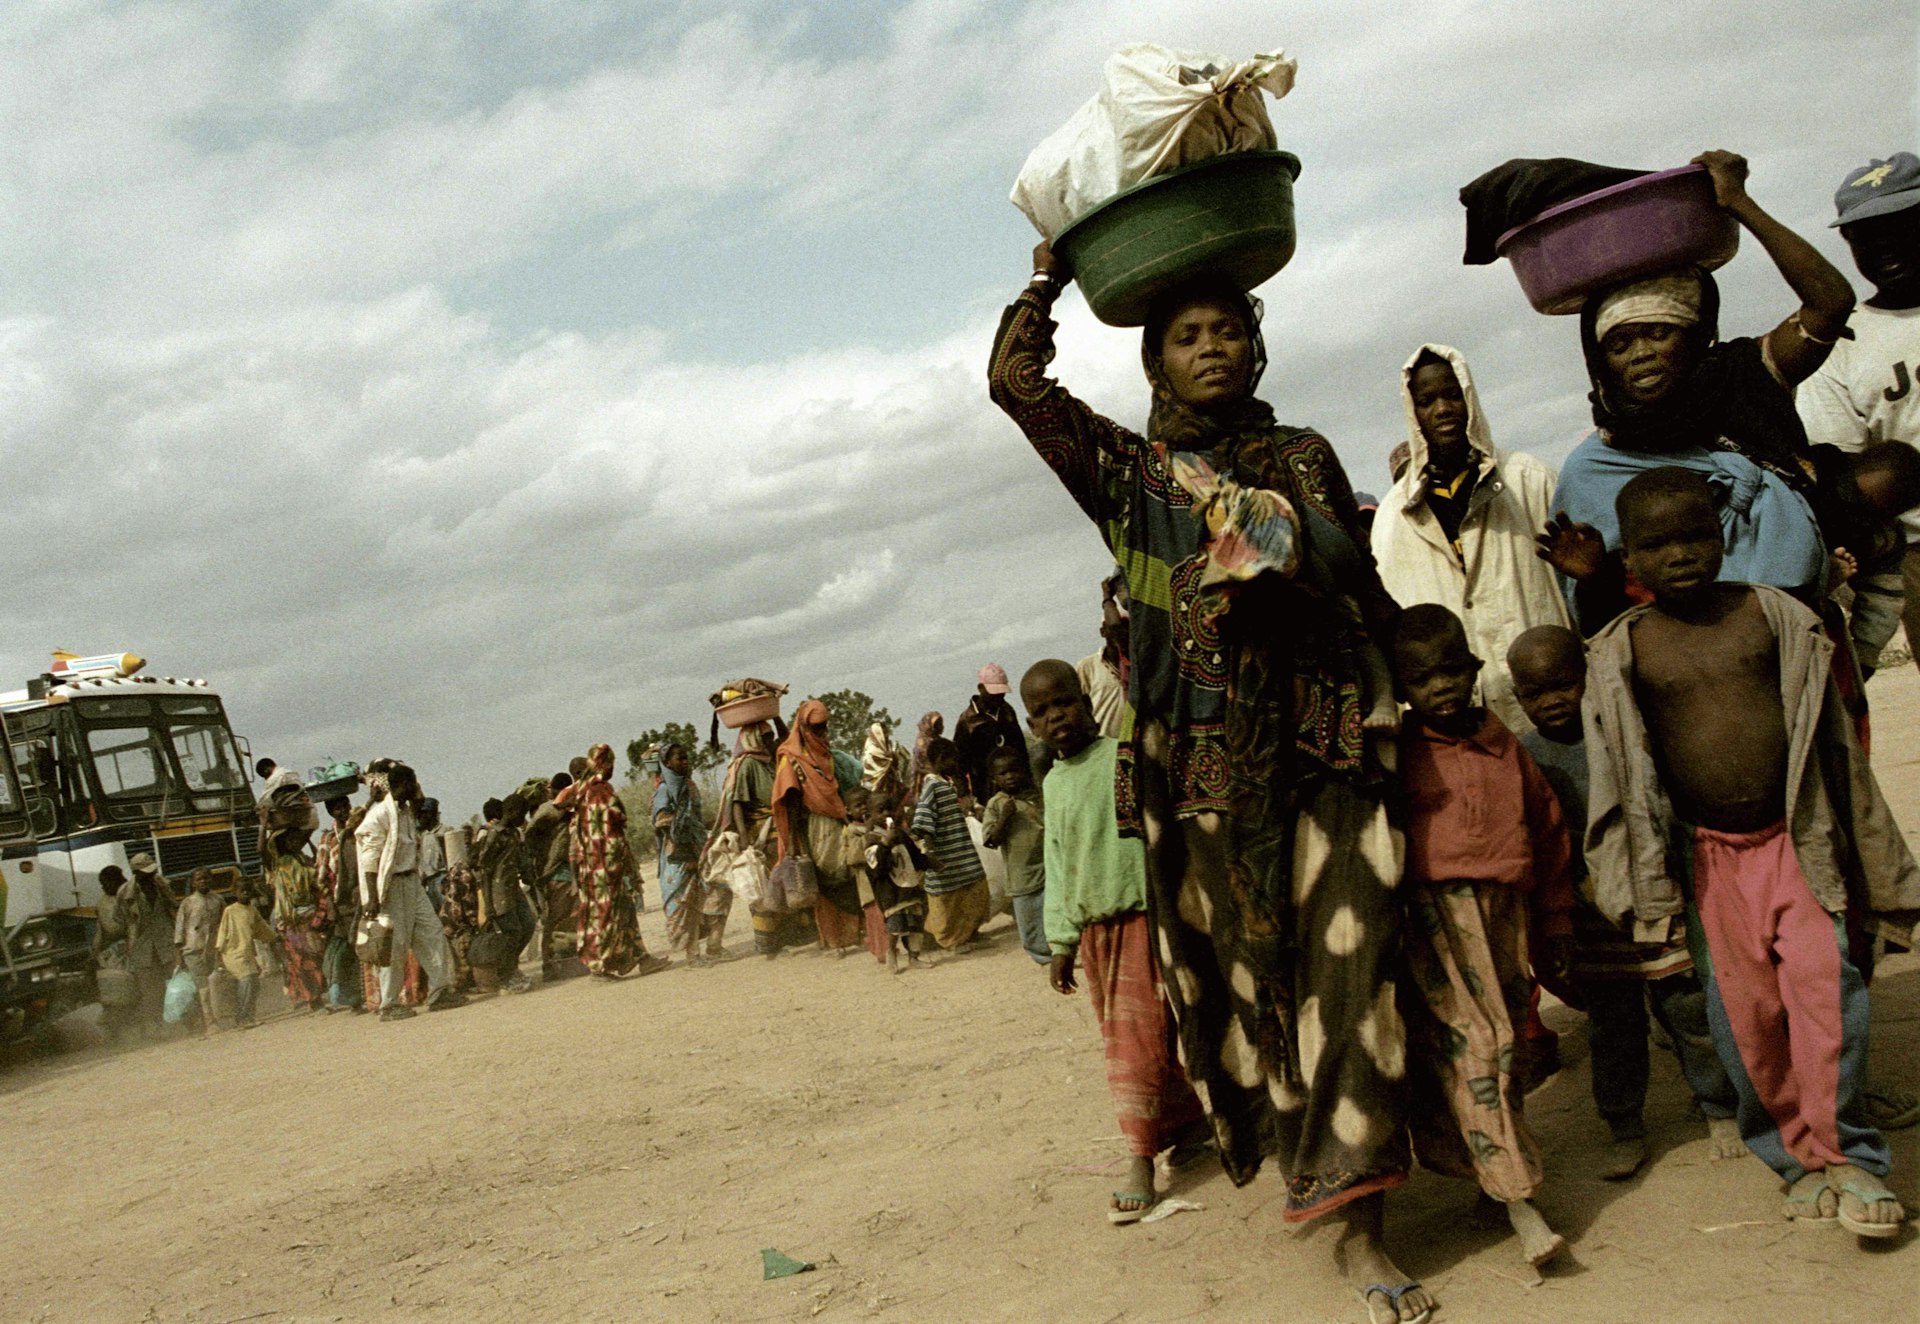 Arrival to Kakuma. Kenya. 2002. © Alex Majoli/Magnum Photos